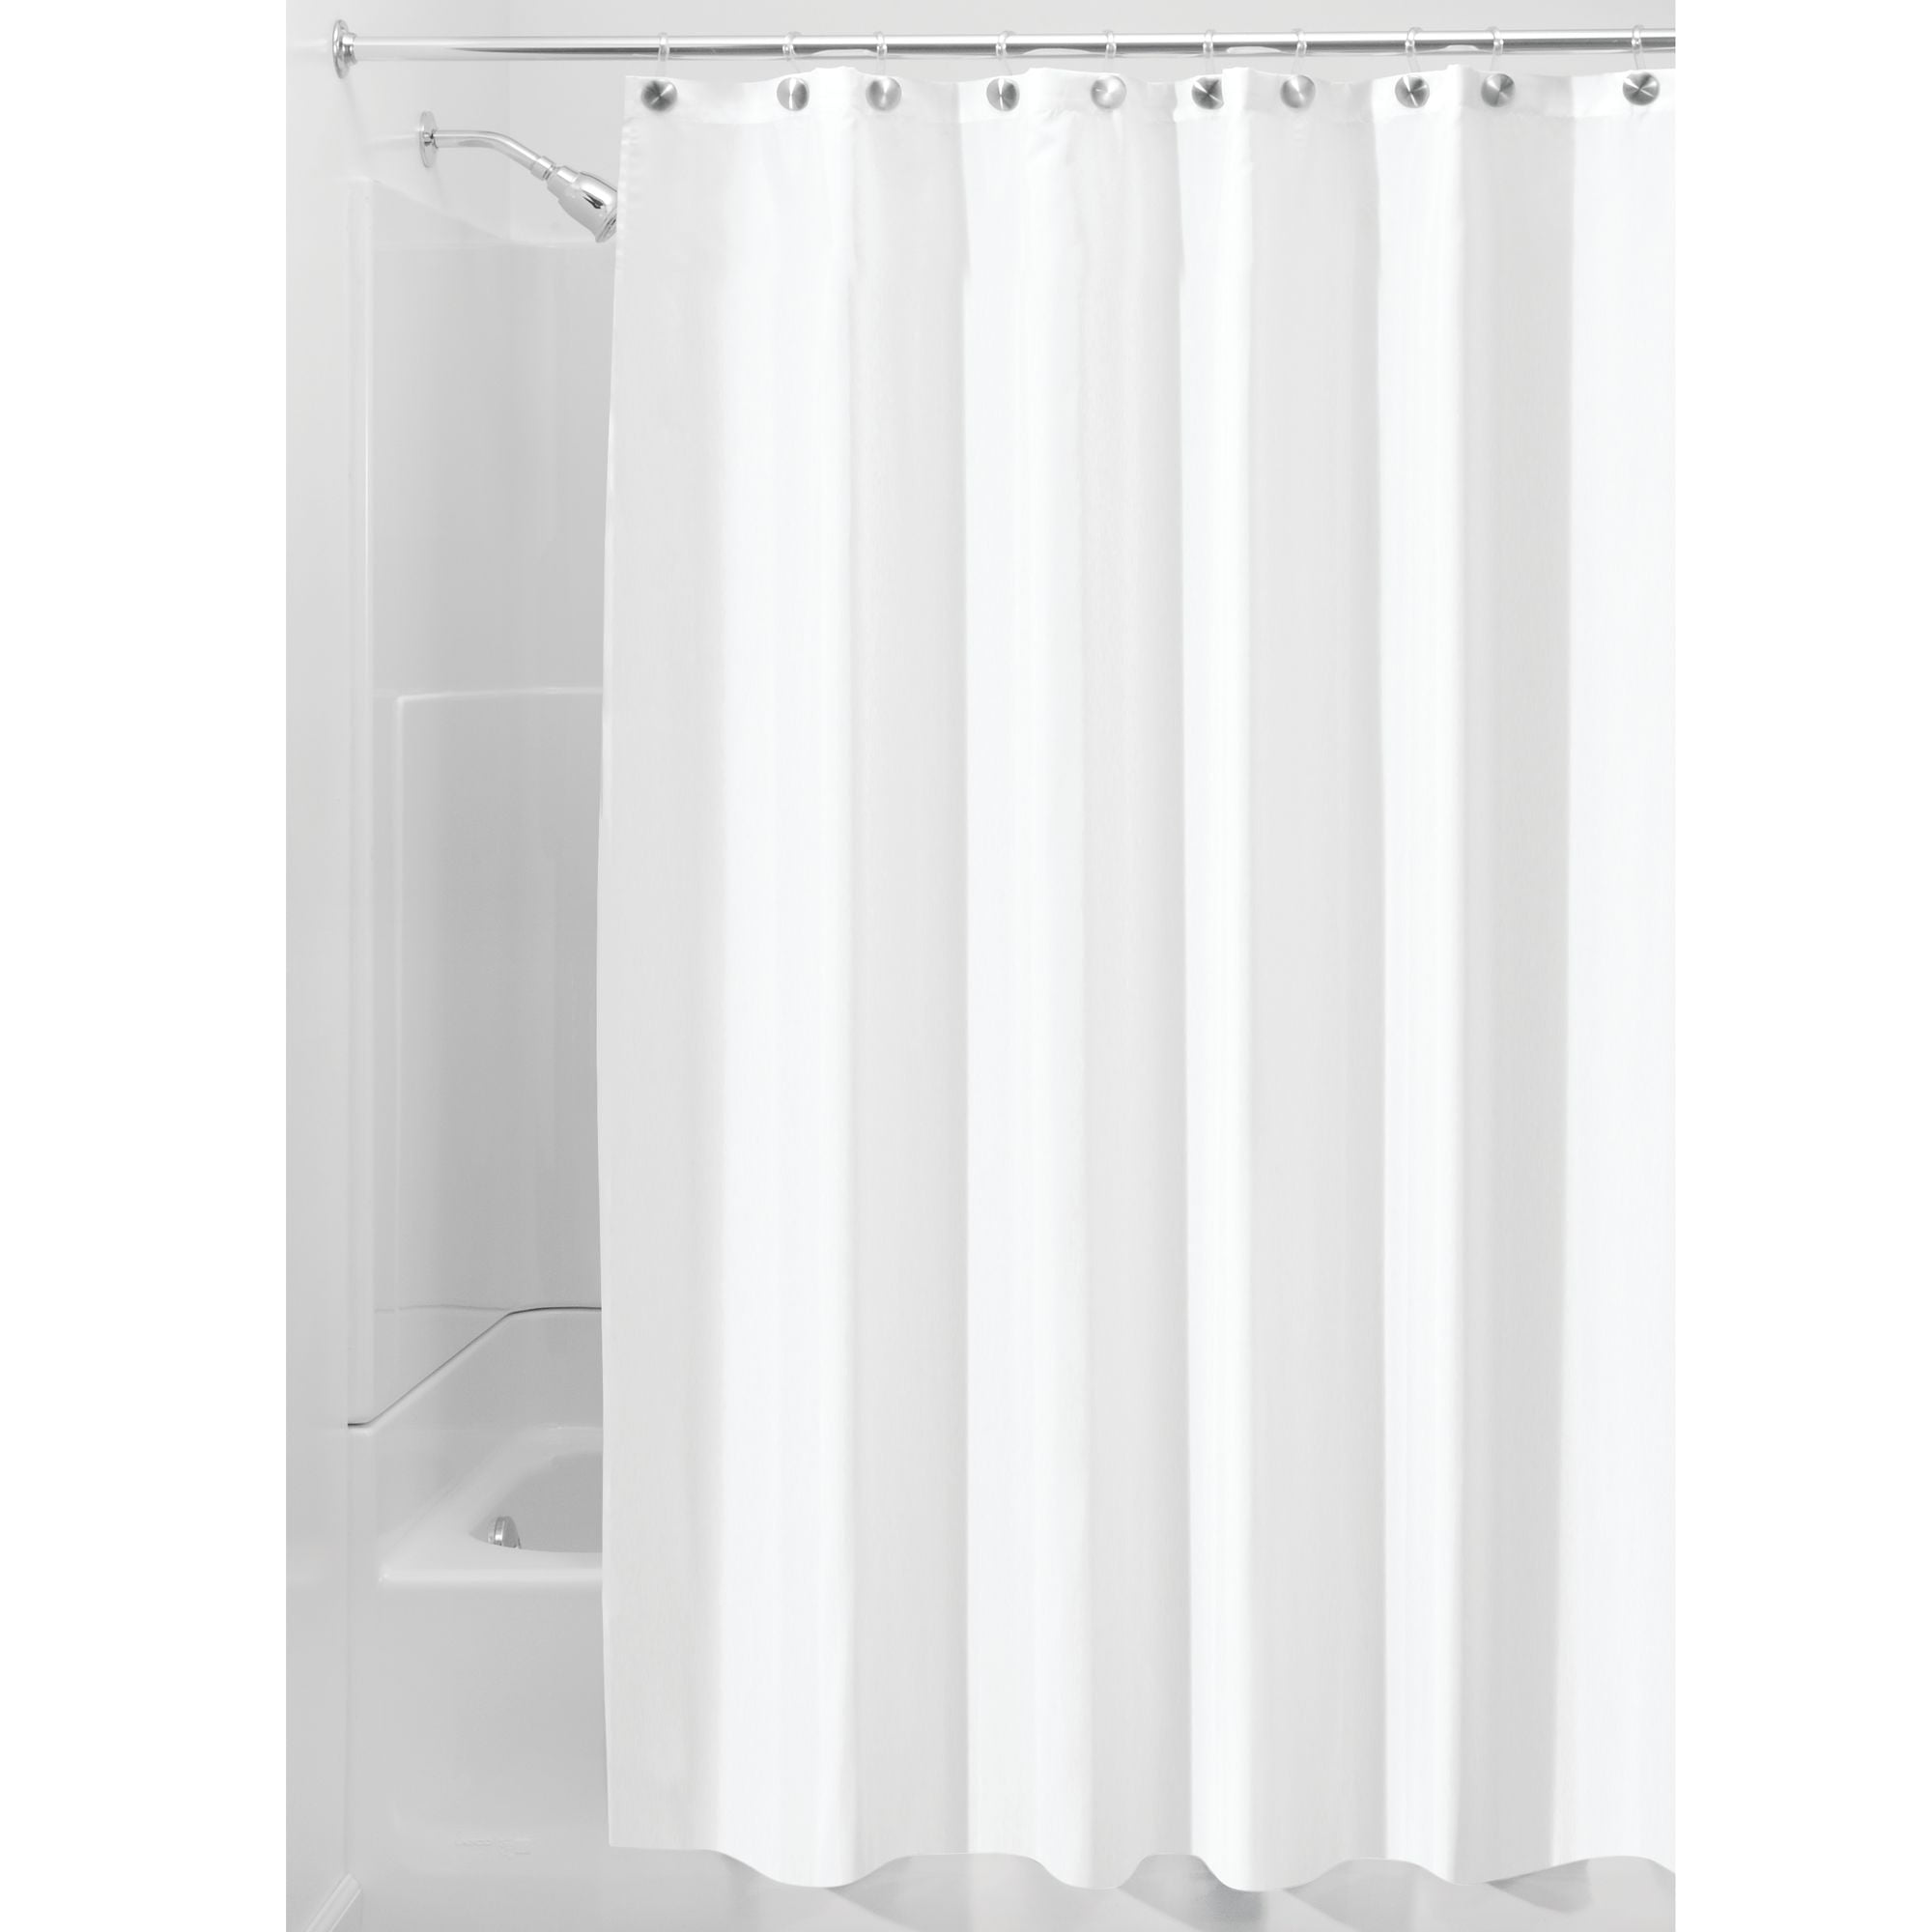 Interdesign Waterproof Fabric Shower, 108 Wide Shower Curtain Liner